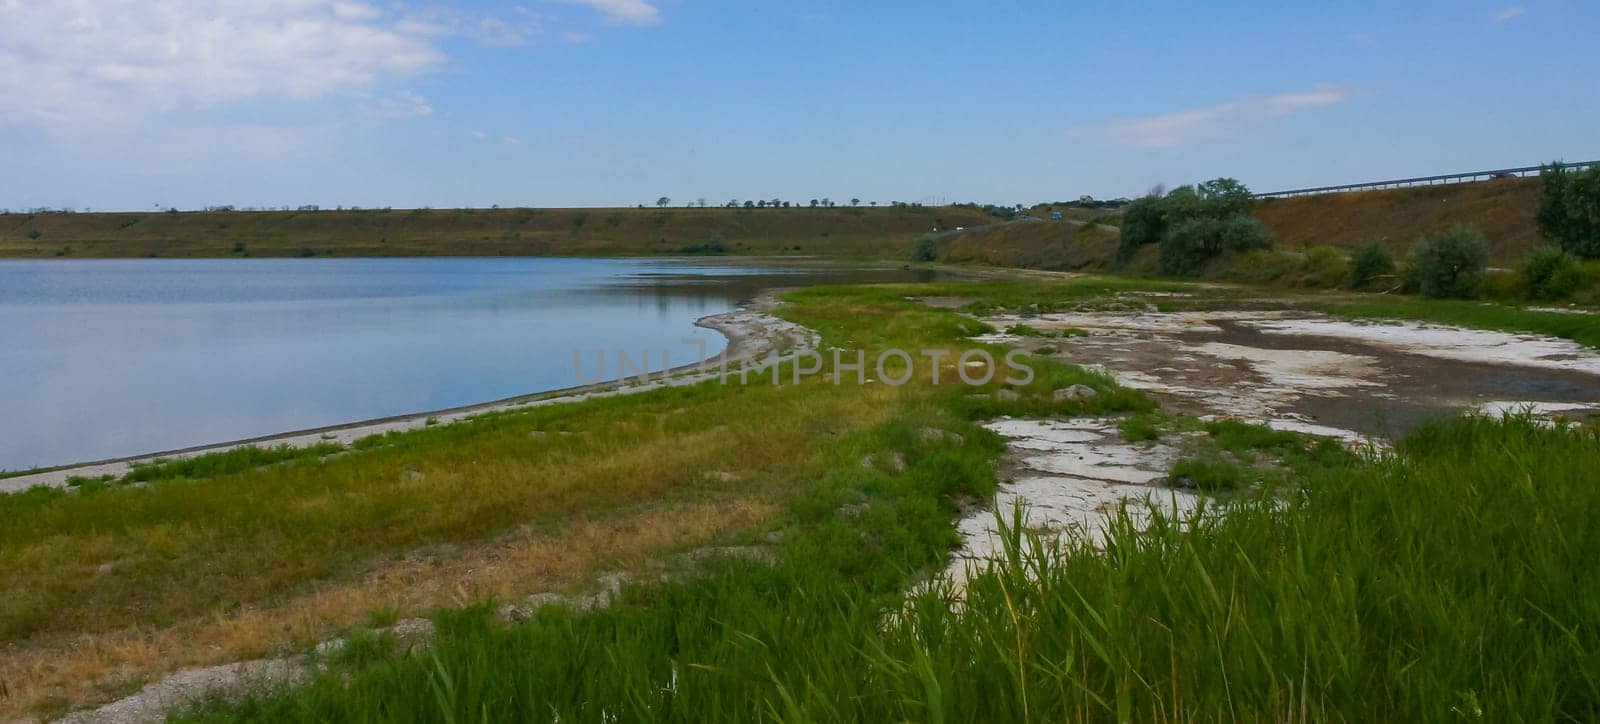 Shallow bay of the Tiligulsky estuary with wild salt-tolerant vegetation on the shore, Ukraine